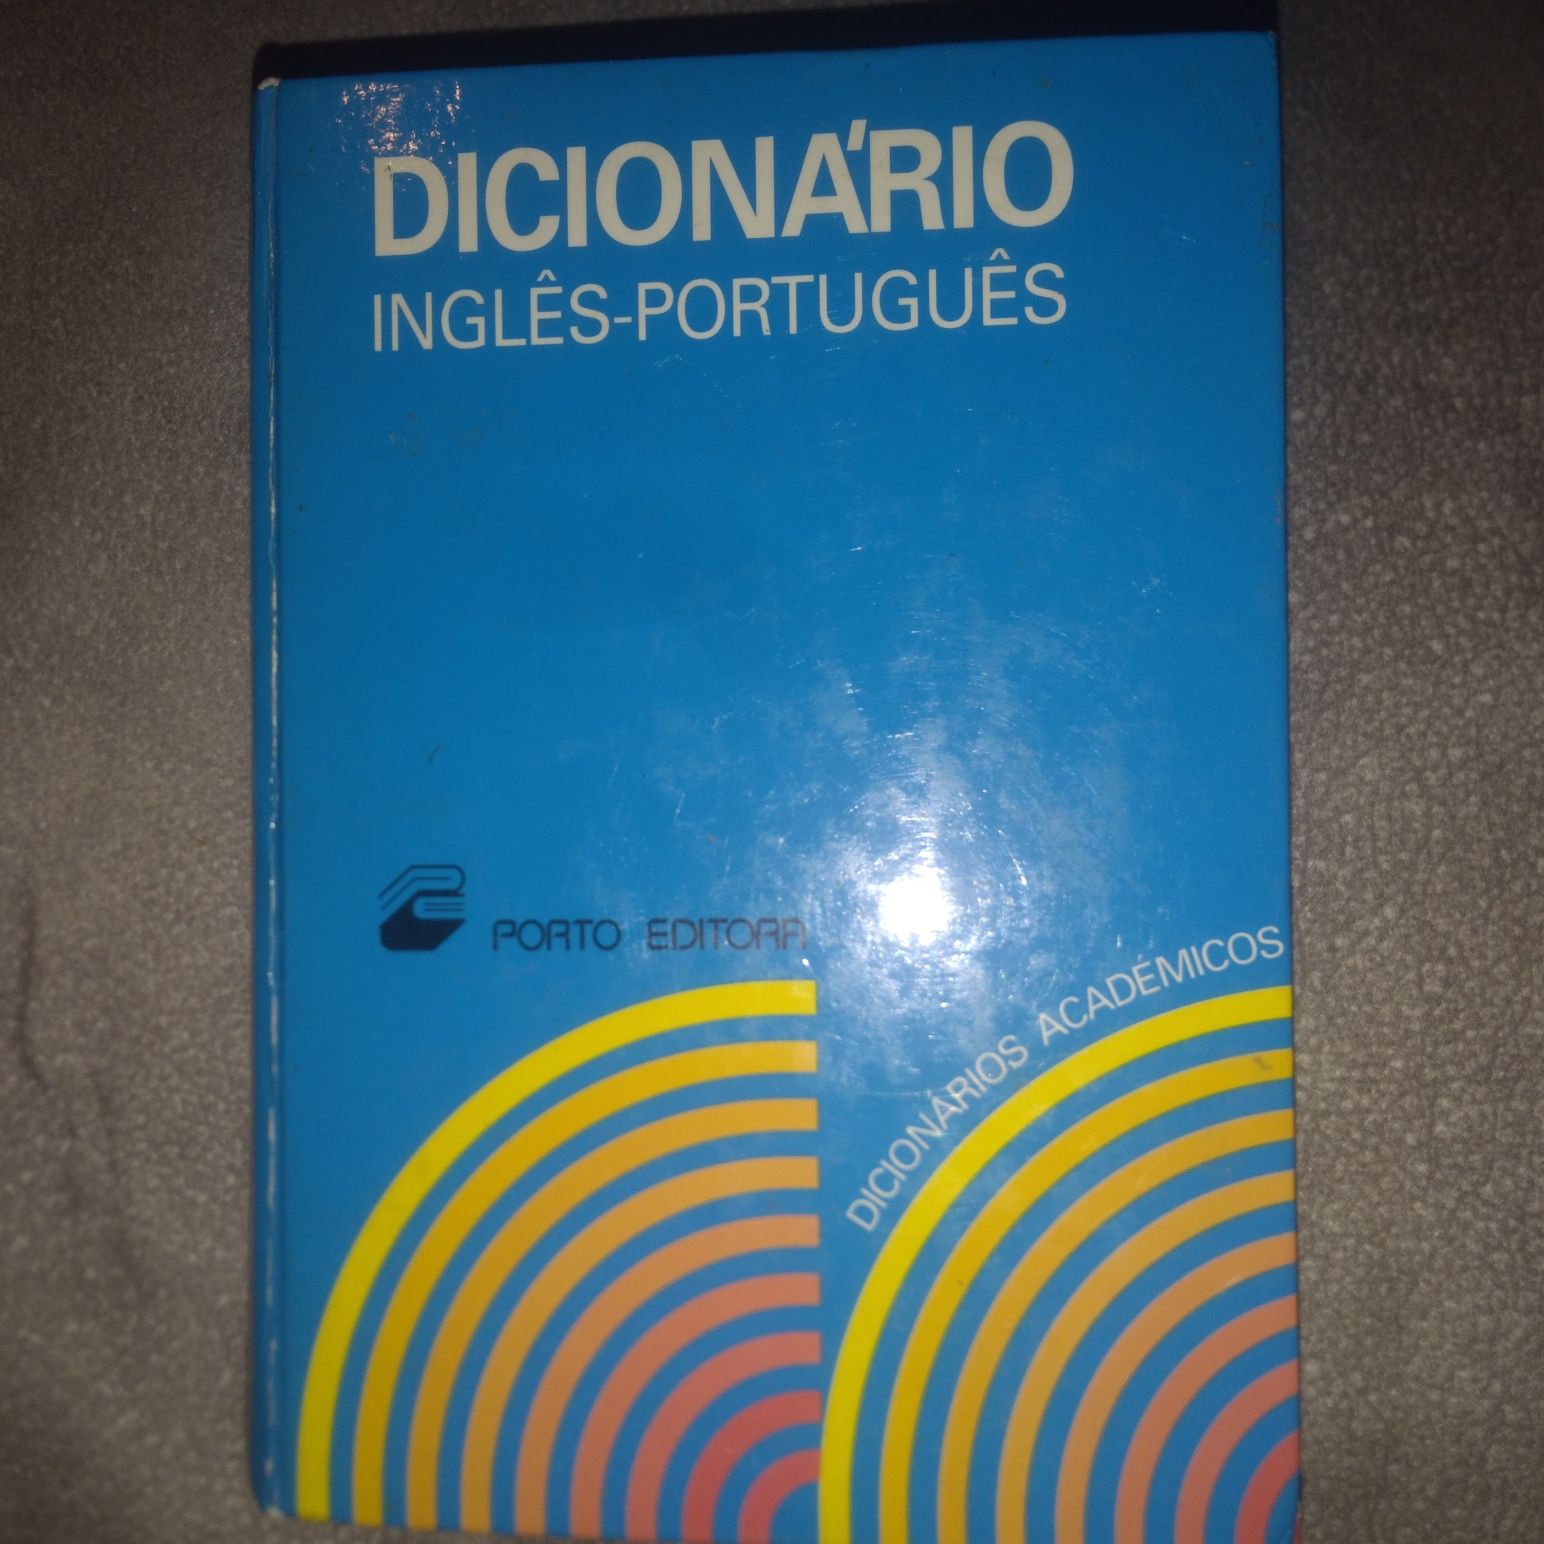 Varios Dicionarios Portugues,Ingles,Frances